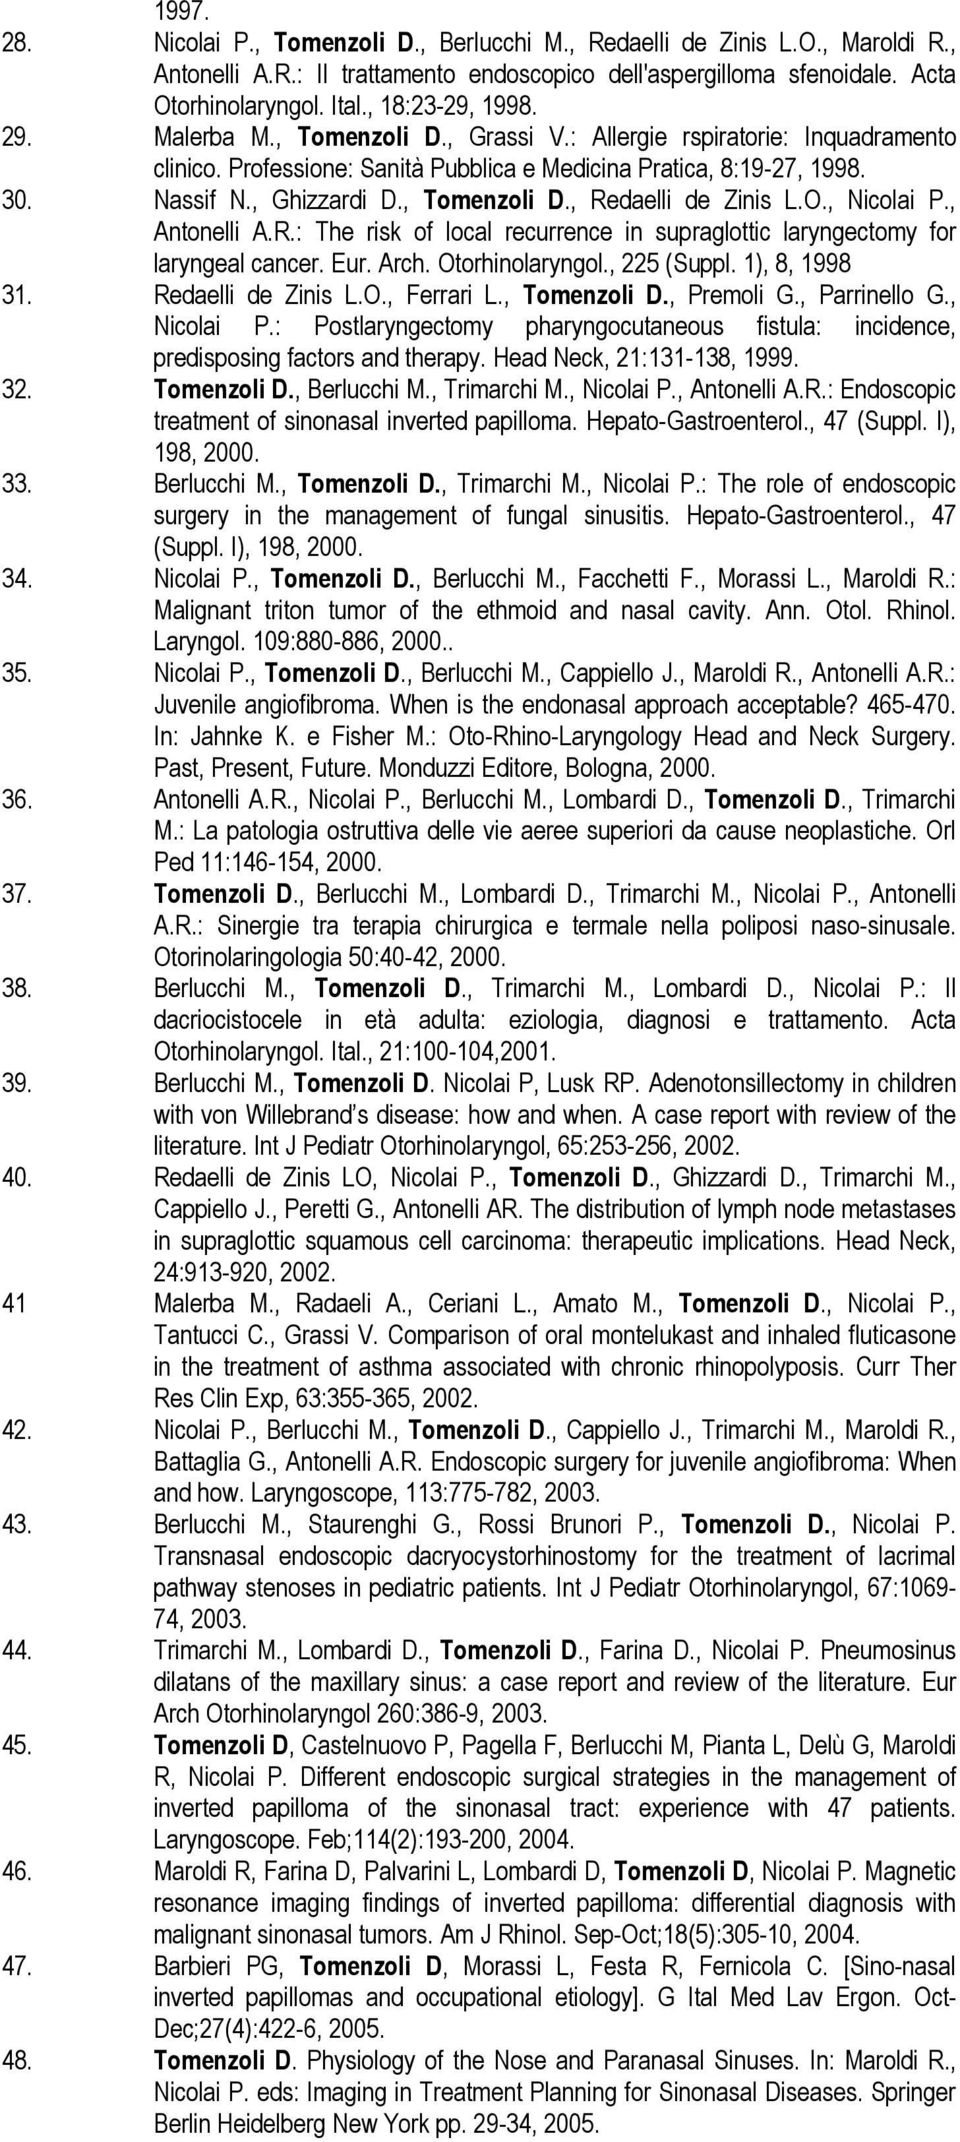 , Tomenzoli D., Redaelli de Zinis L.O., Nicolai P., Antonelli A.R.: The risk of local recurrence in supraglottic laryngectomy for laryngeal cancer. Eur. Arch. Otorhinolaryngol., 225 (Suppl.